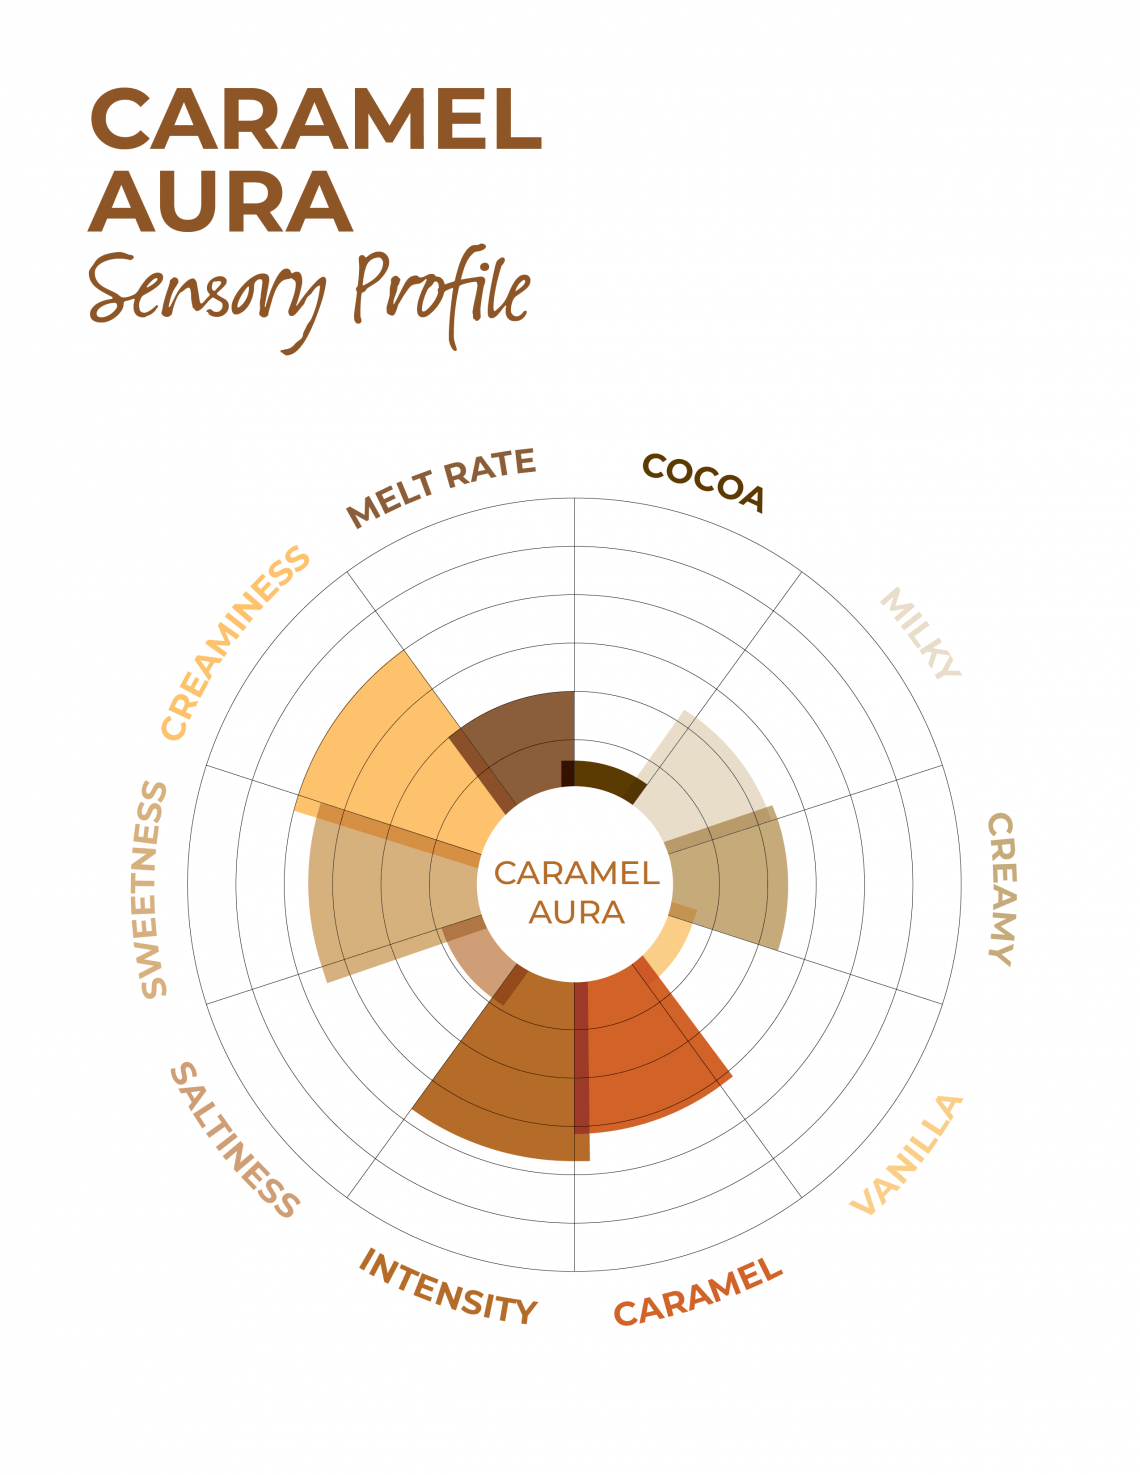 Caramel Aura sensory wheel graphic